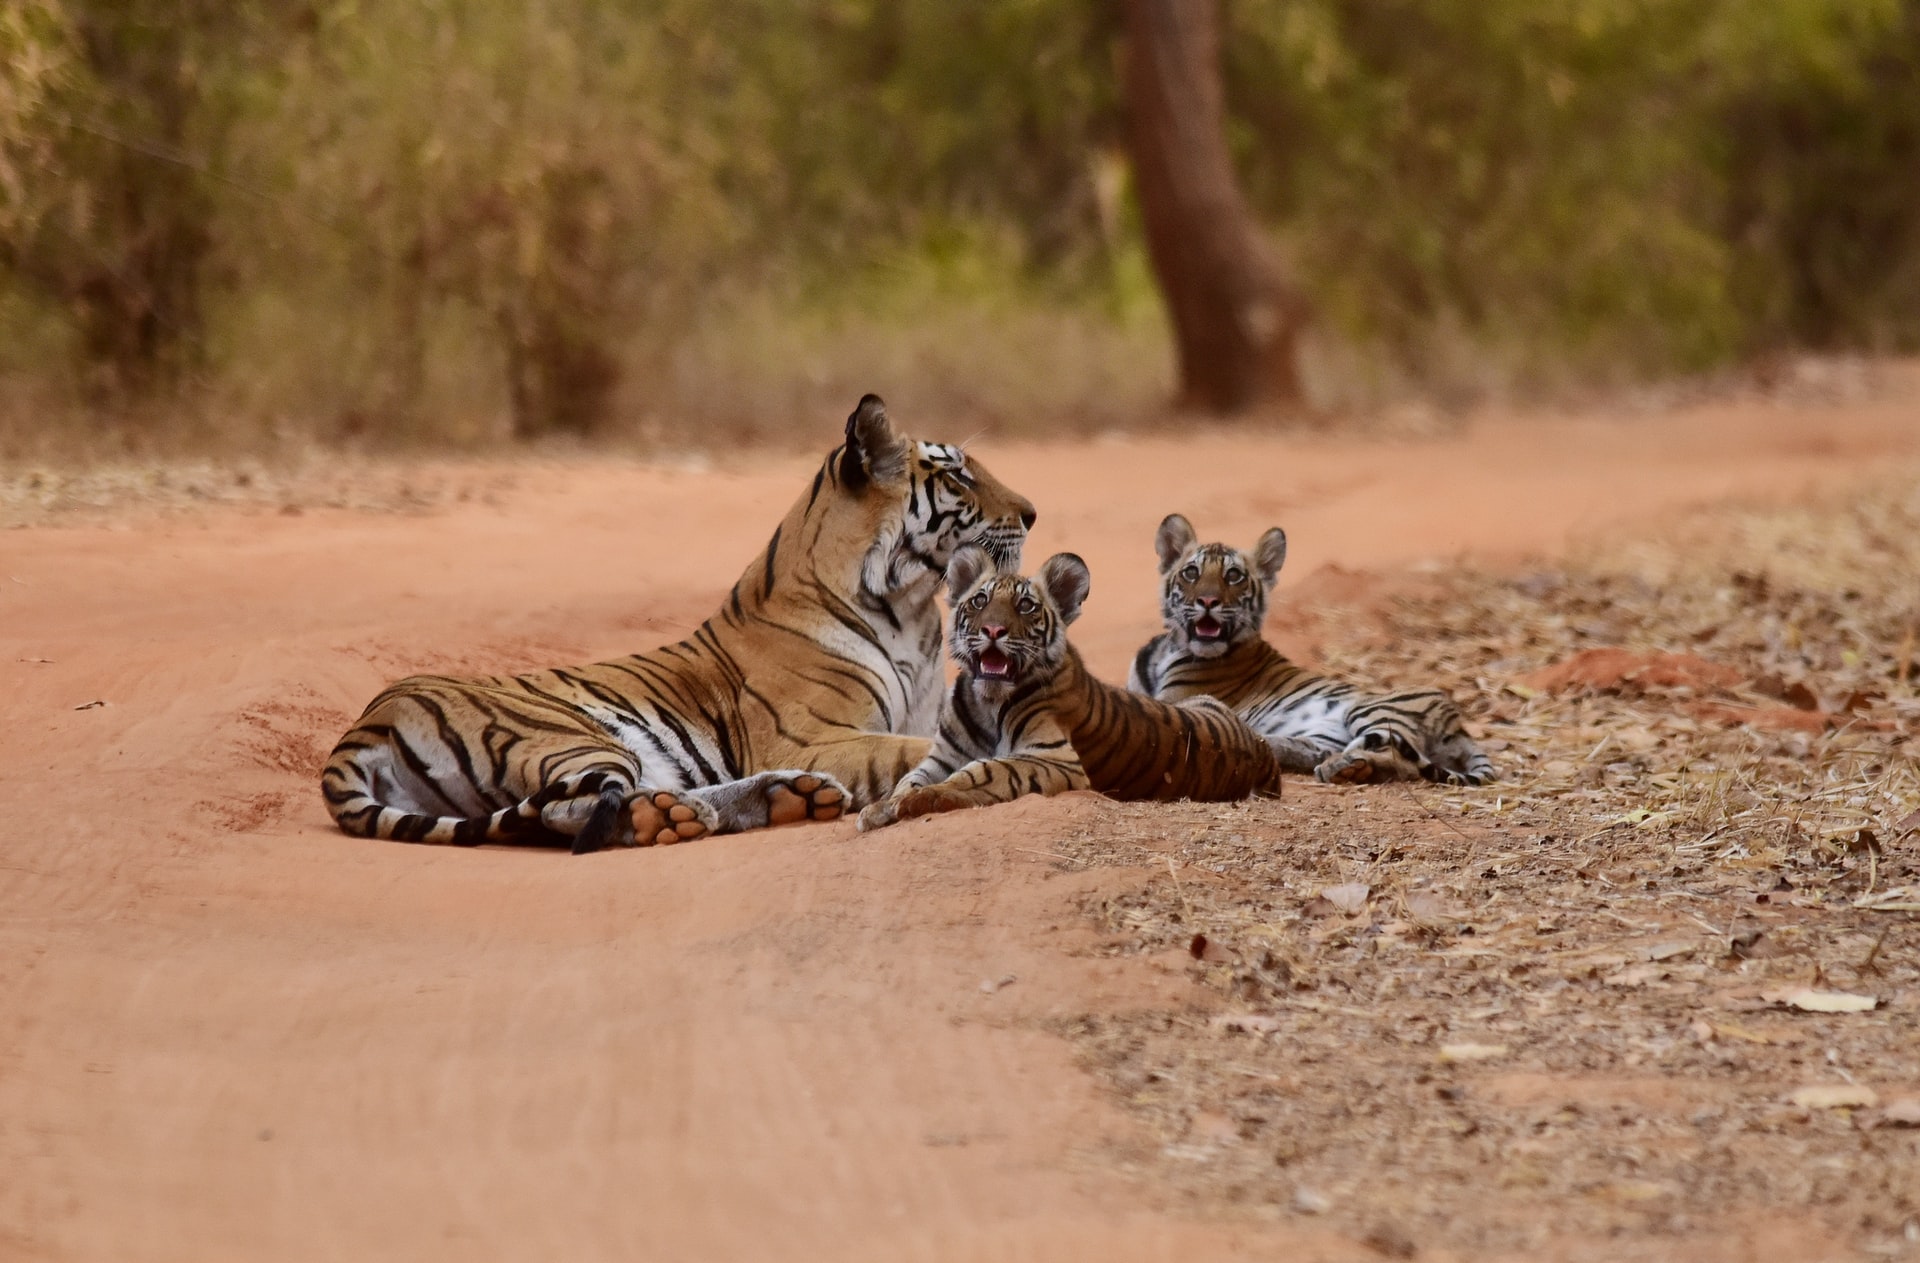 Ferocious cats of the jungle, Indias Natinal Park, North India's wildlife 